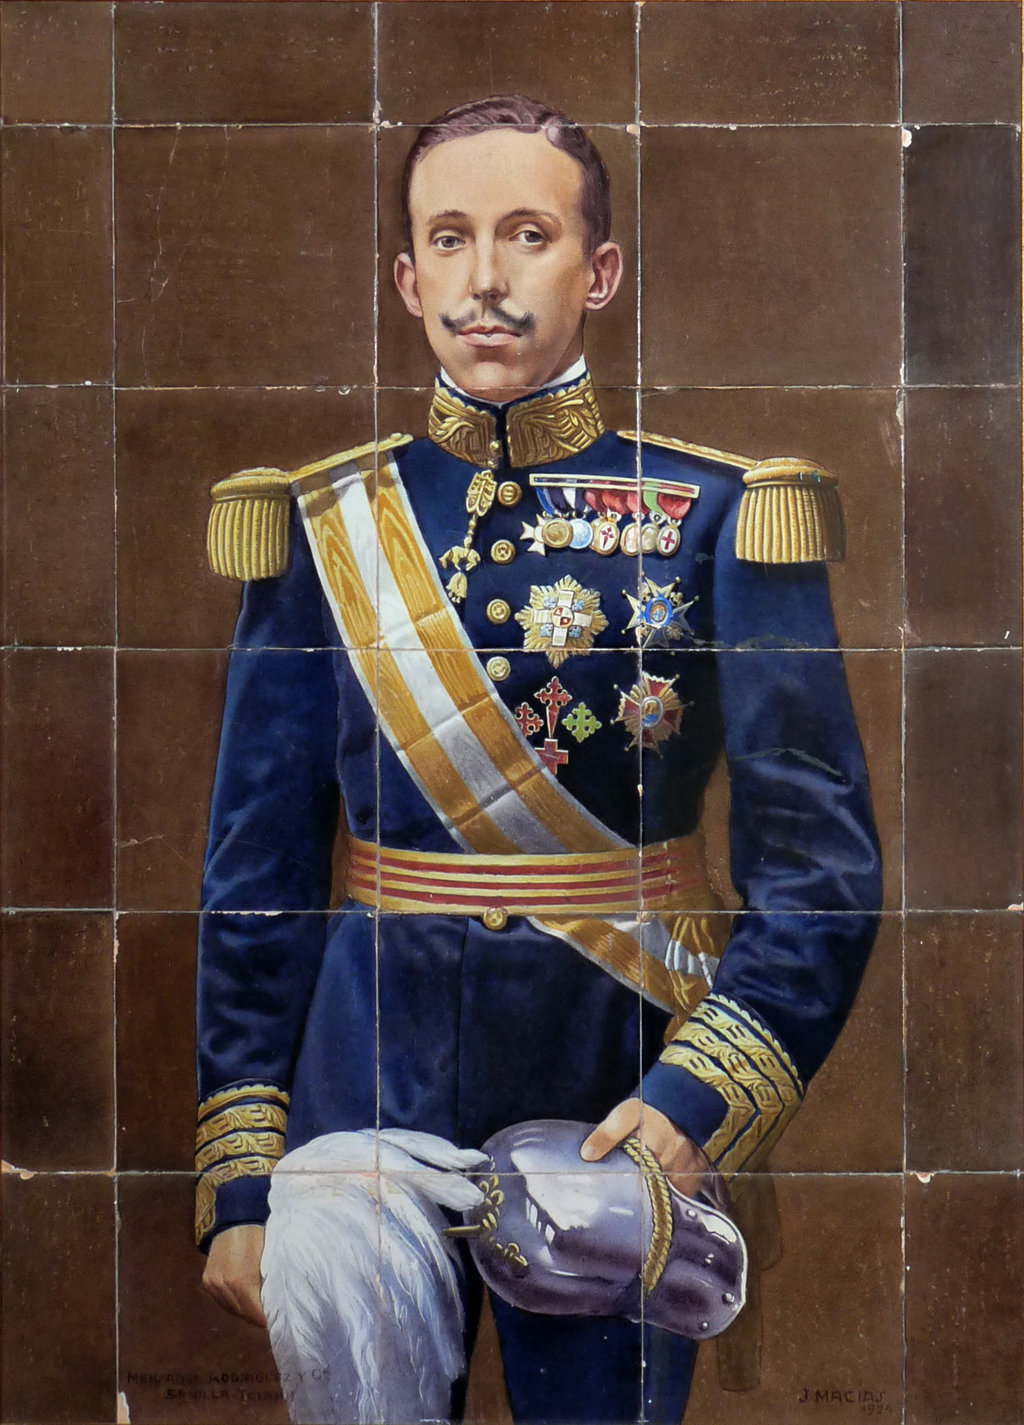 01115. Retrato del Rey Alfonso XIII. Sevilla.